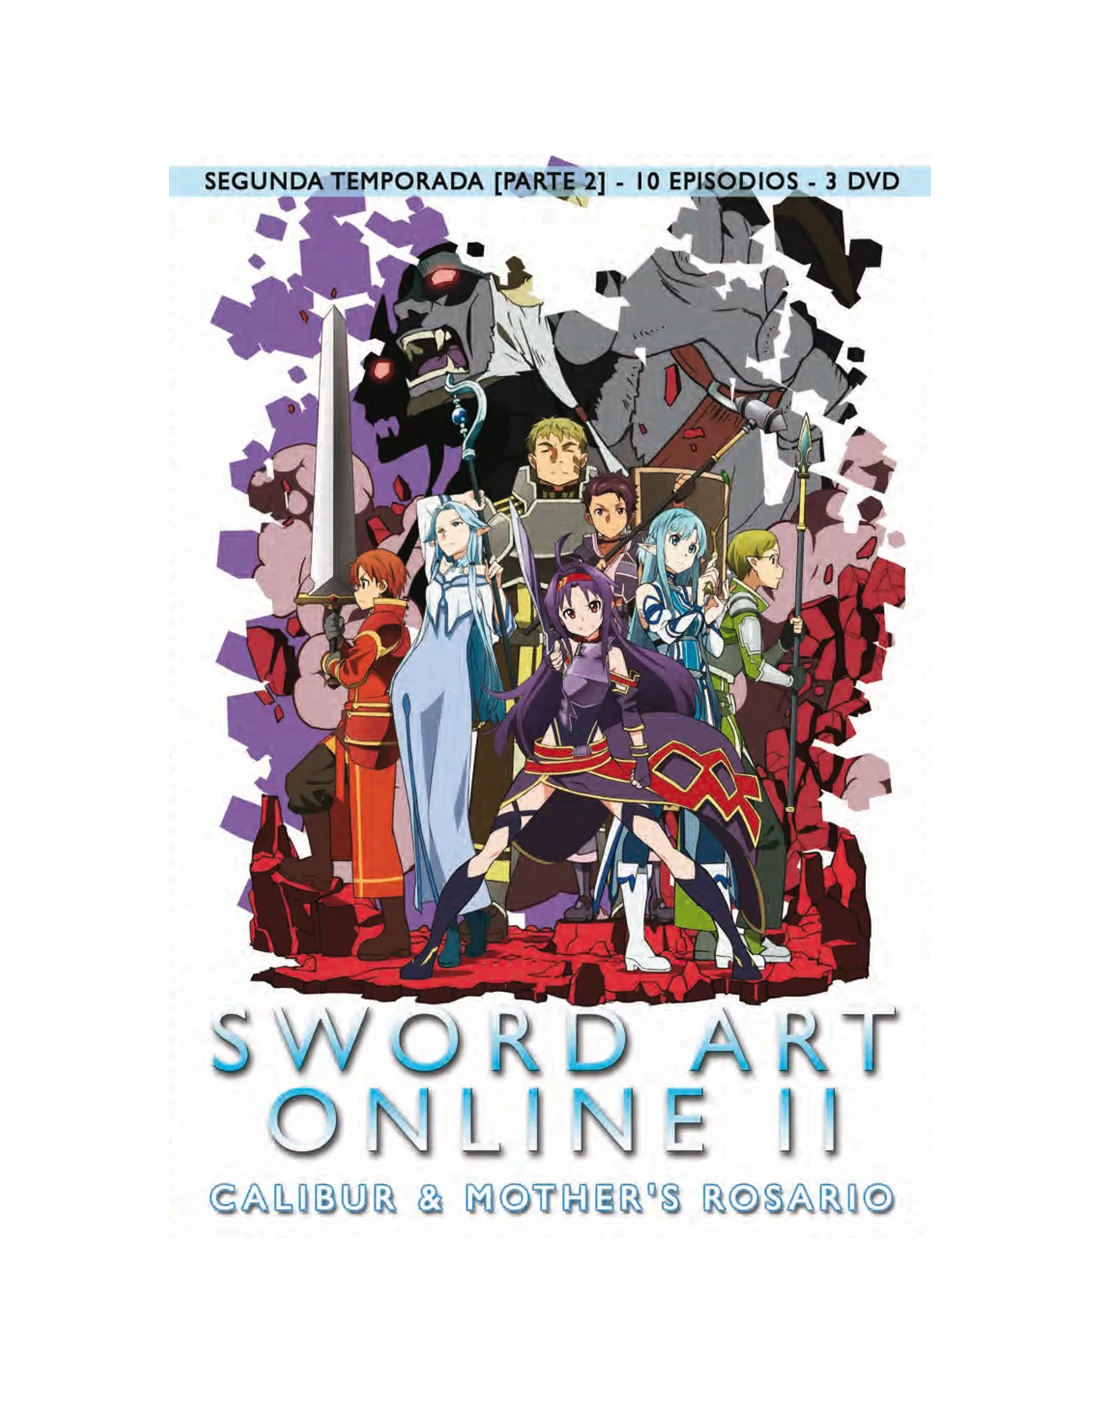 DVD Sword Art Online - Temporada 1, Parte 2 (Episodios 15-25